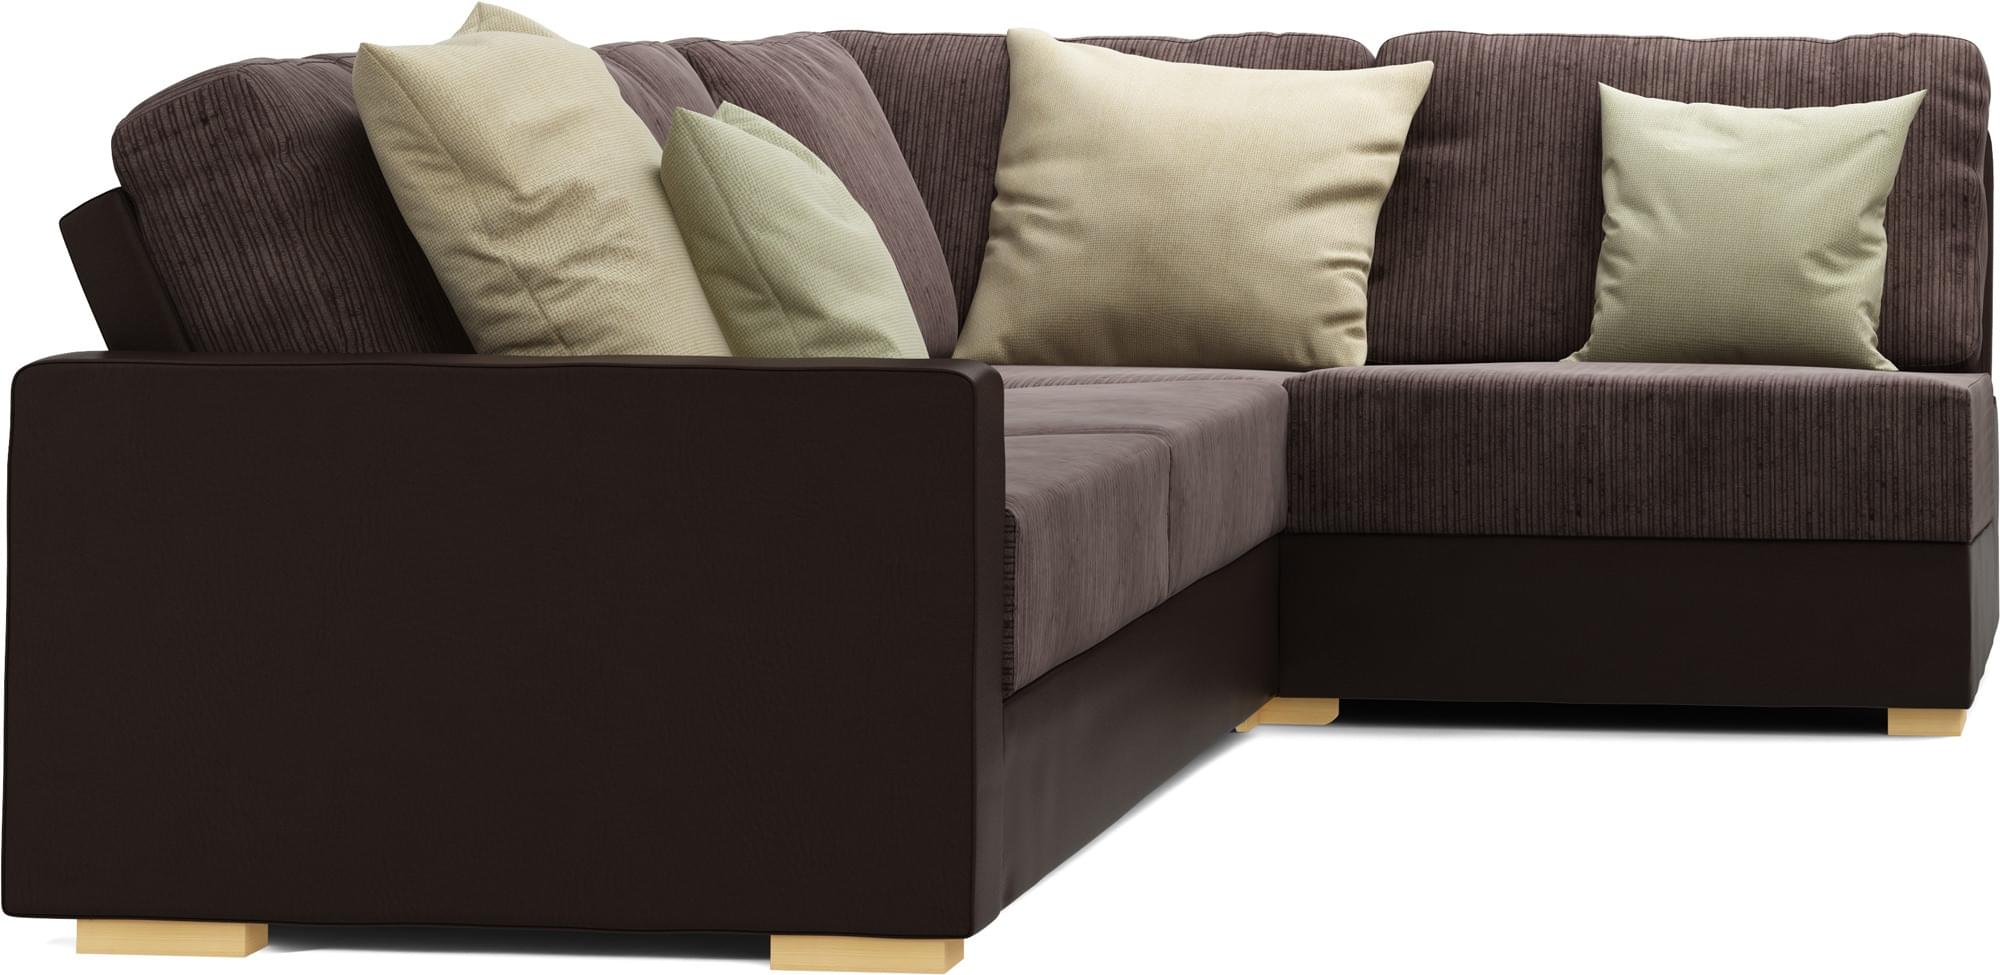 Ula Armless 3X2 Double Sofa Bed